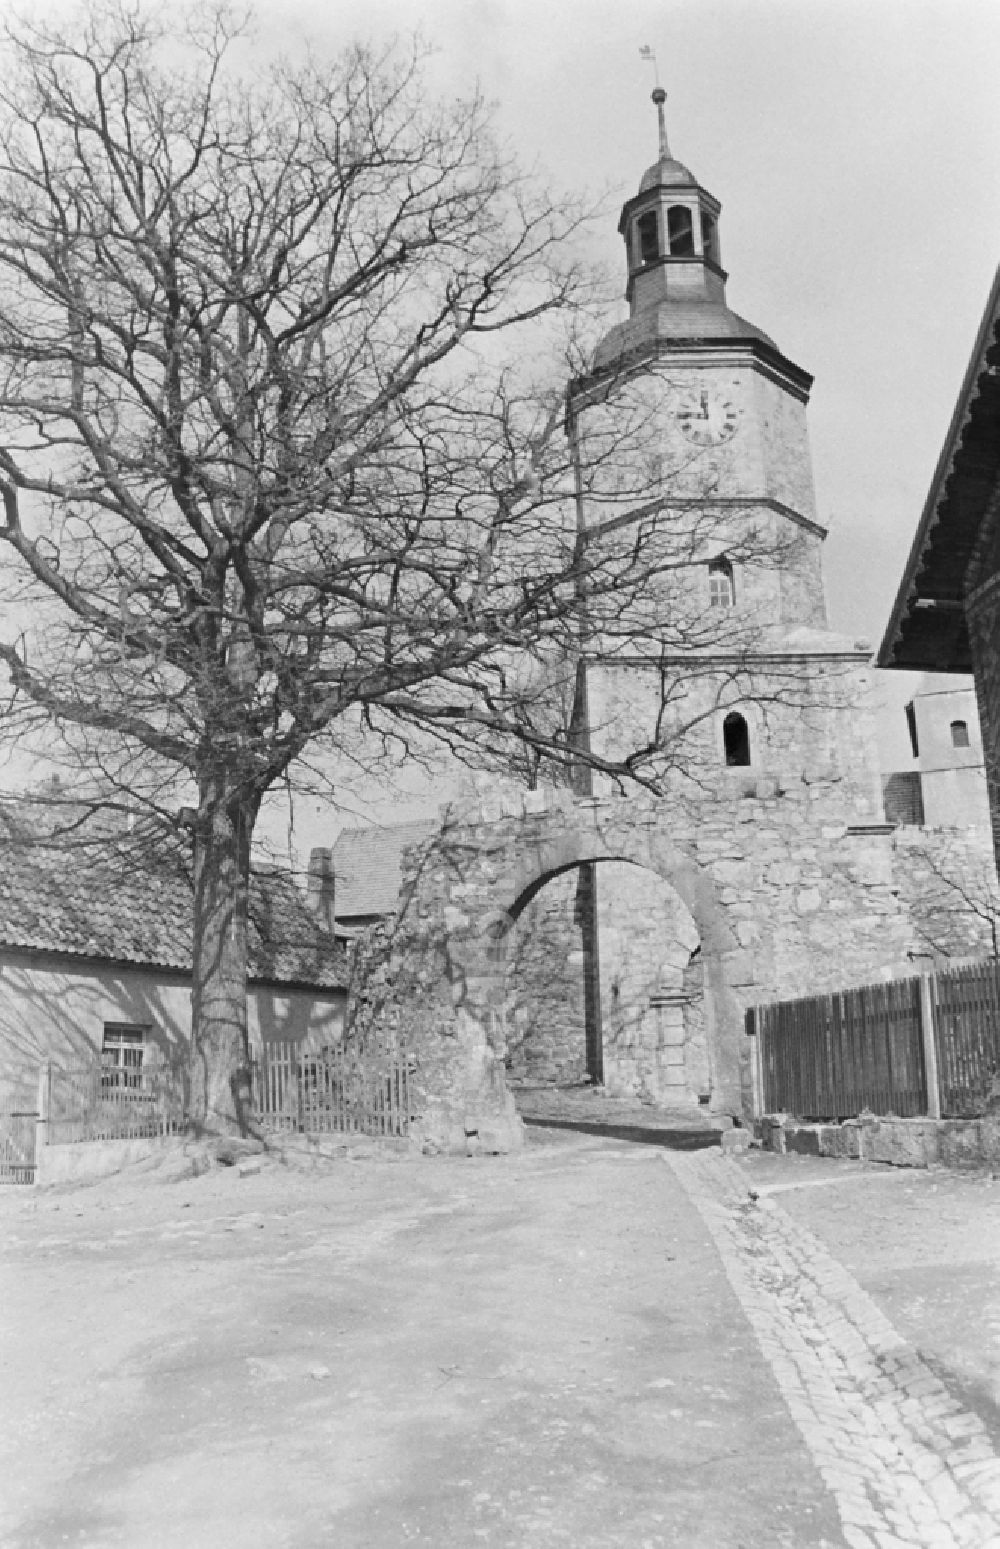 DDR-Fotoarchiv: Rohr - Das Dorf Rohr in Thüringen